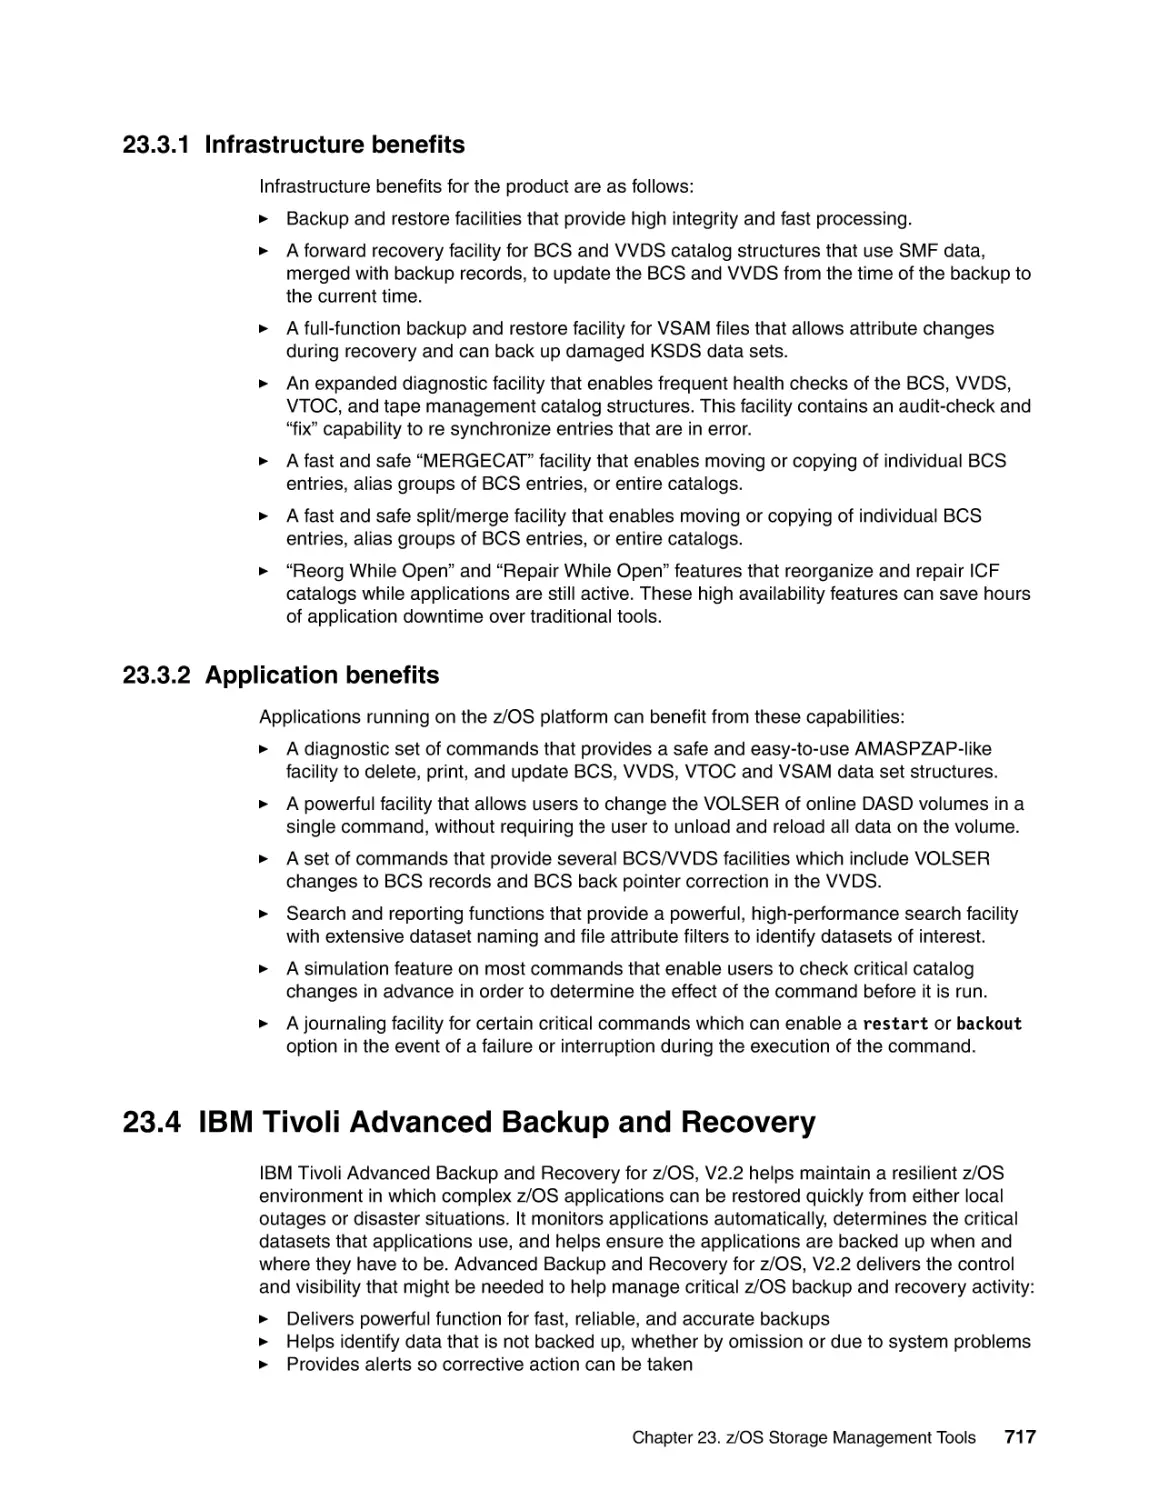 23.3.1 Infrastructure benefits
23.3.2 Application benefits
23.4 IBM Tivoli Advanced Backup and Recovery